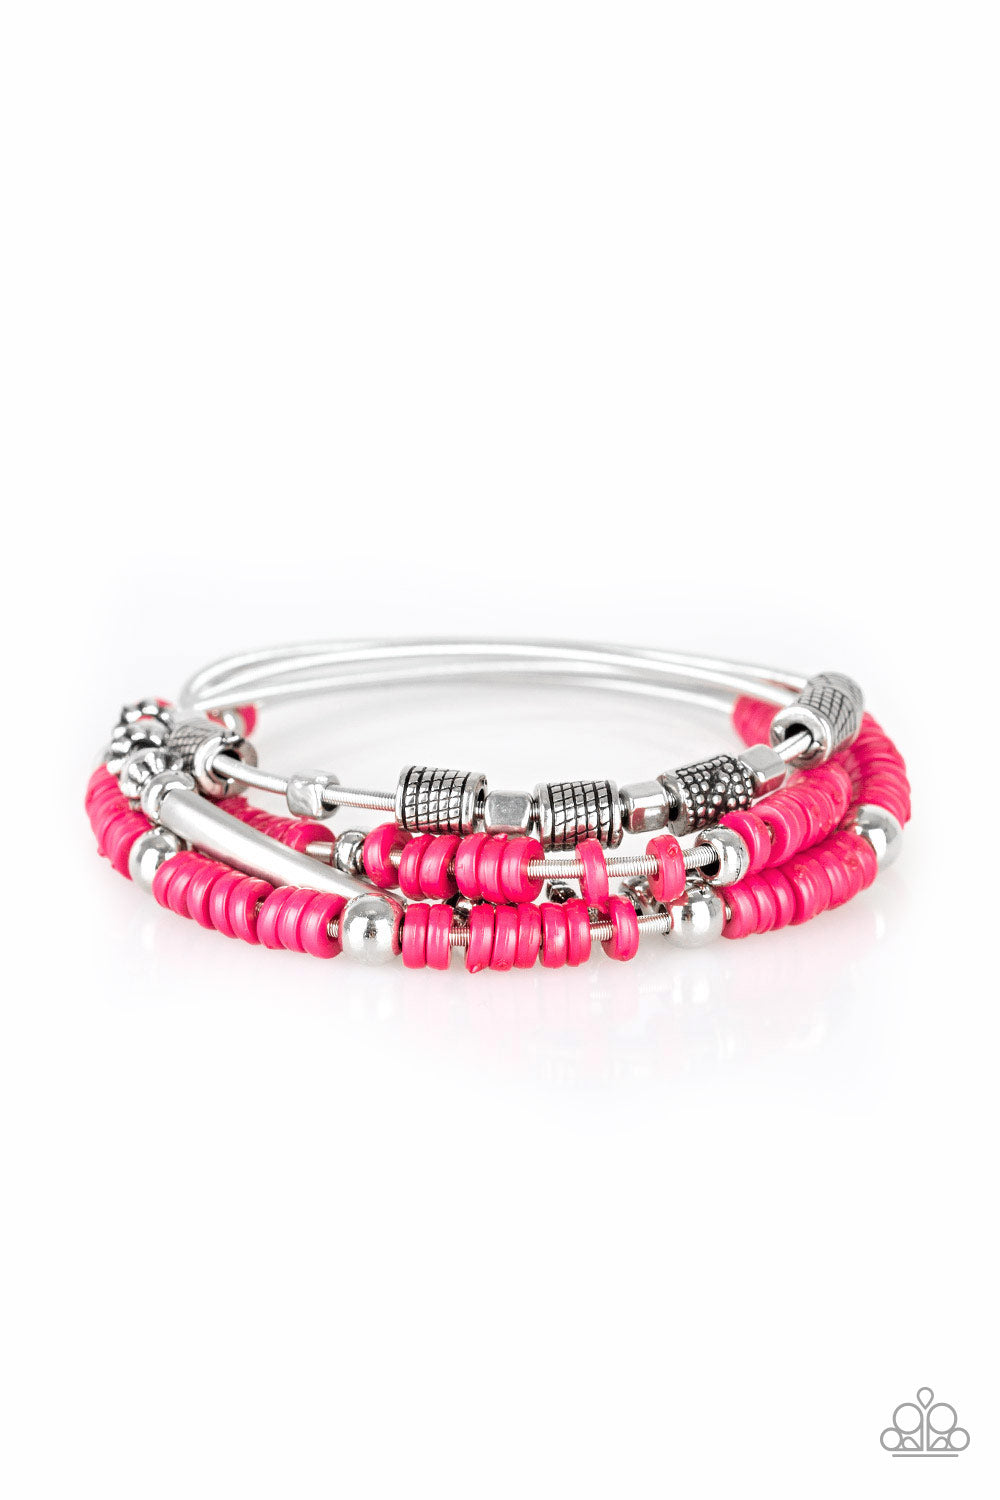 Tribal Spunk Bracelet - Pink